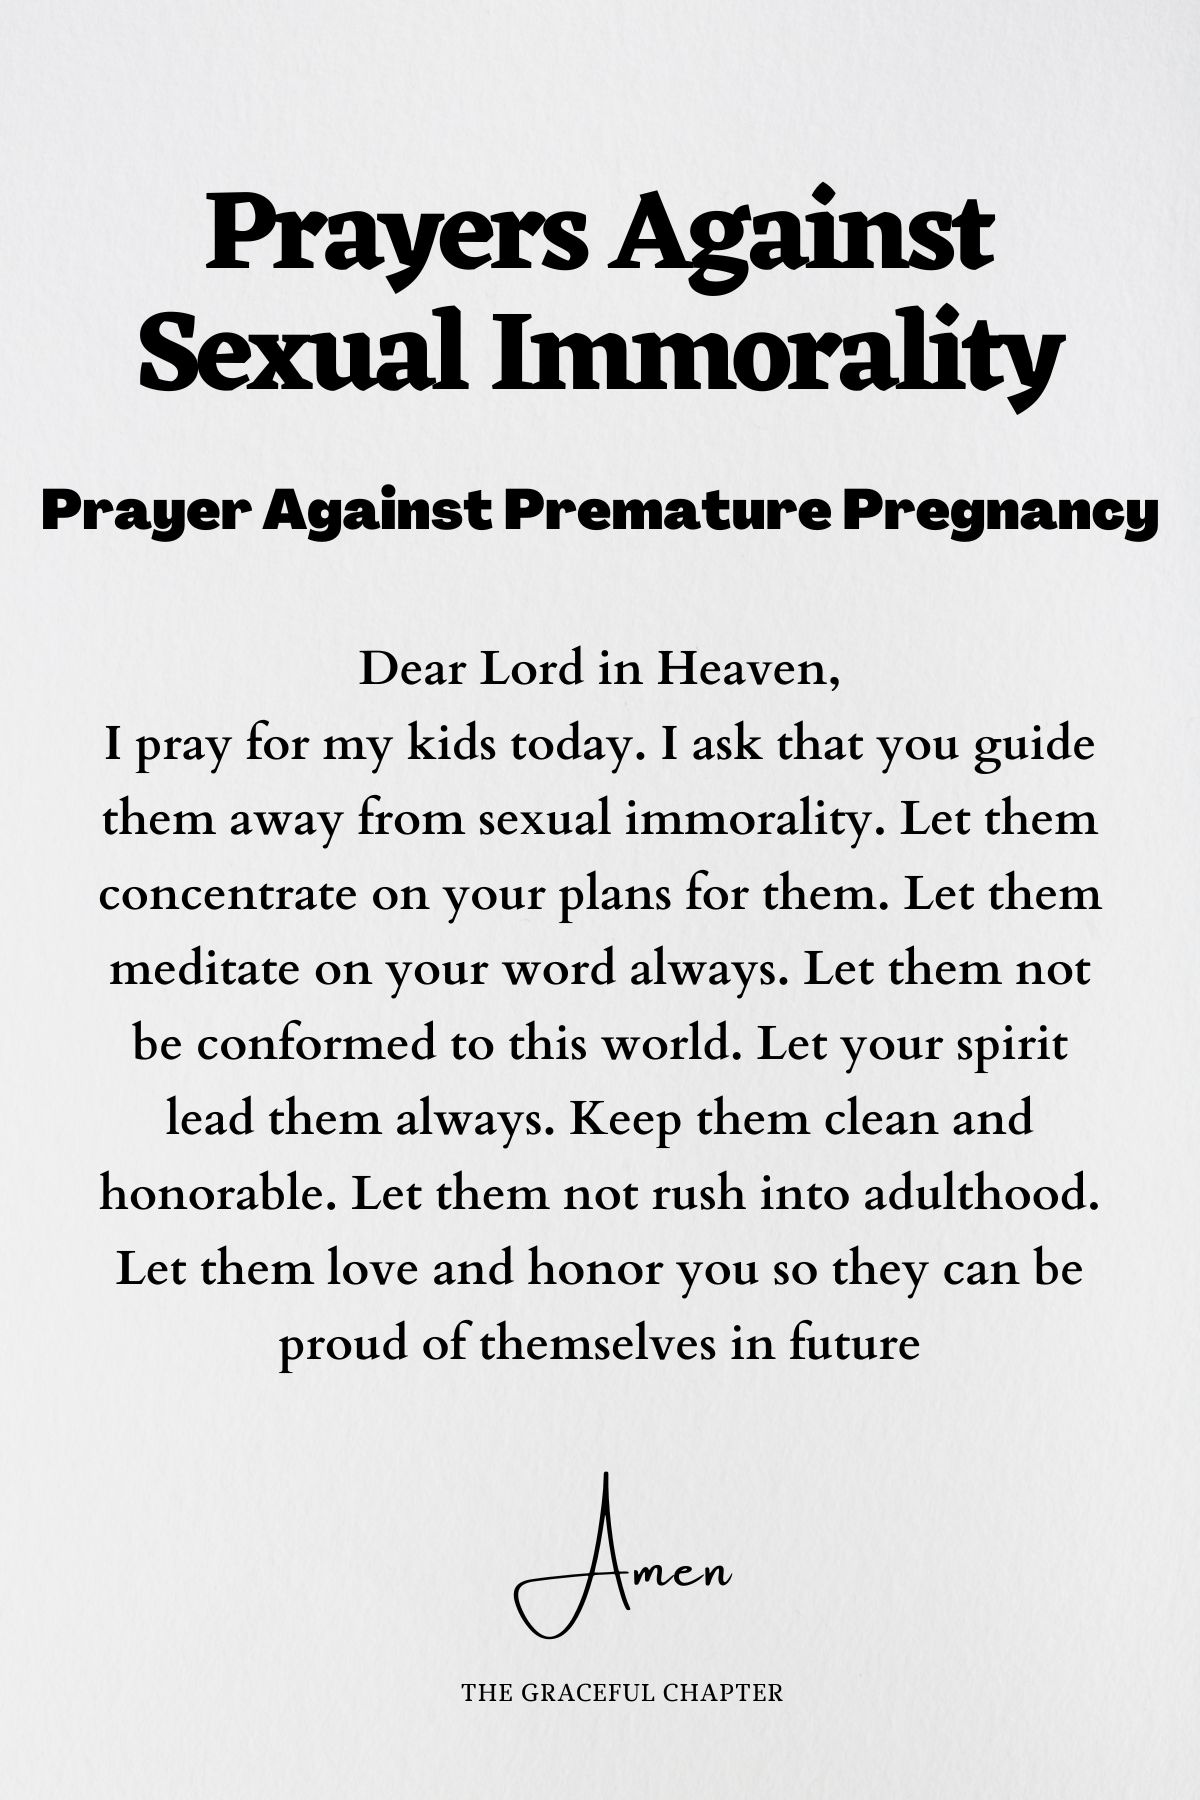 Prayer against premature pregnancy